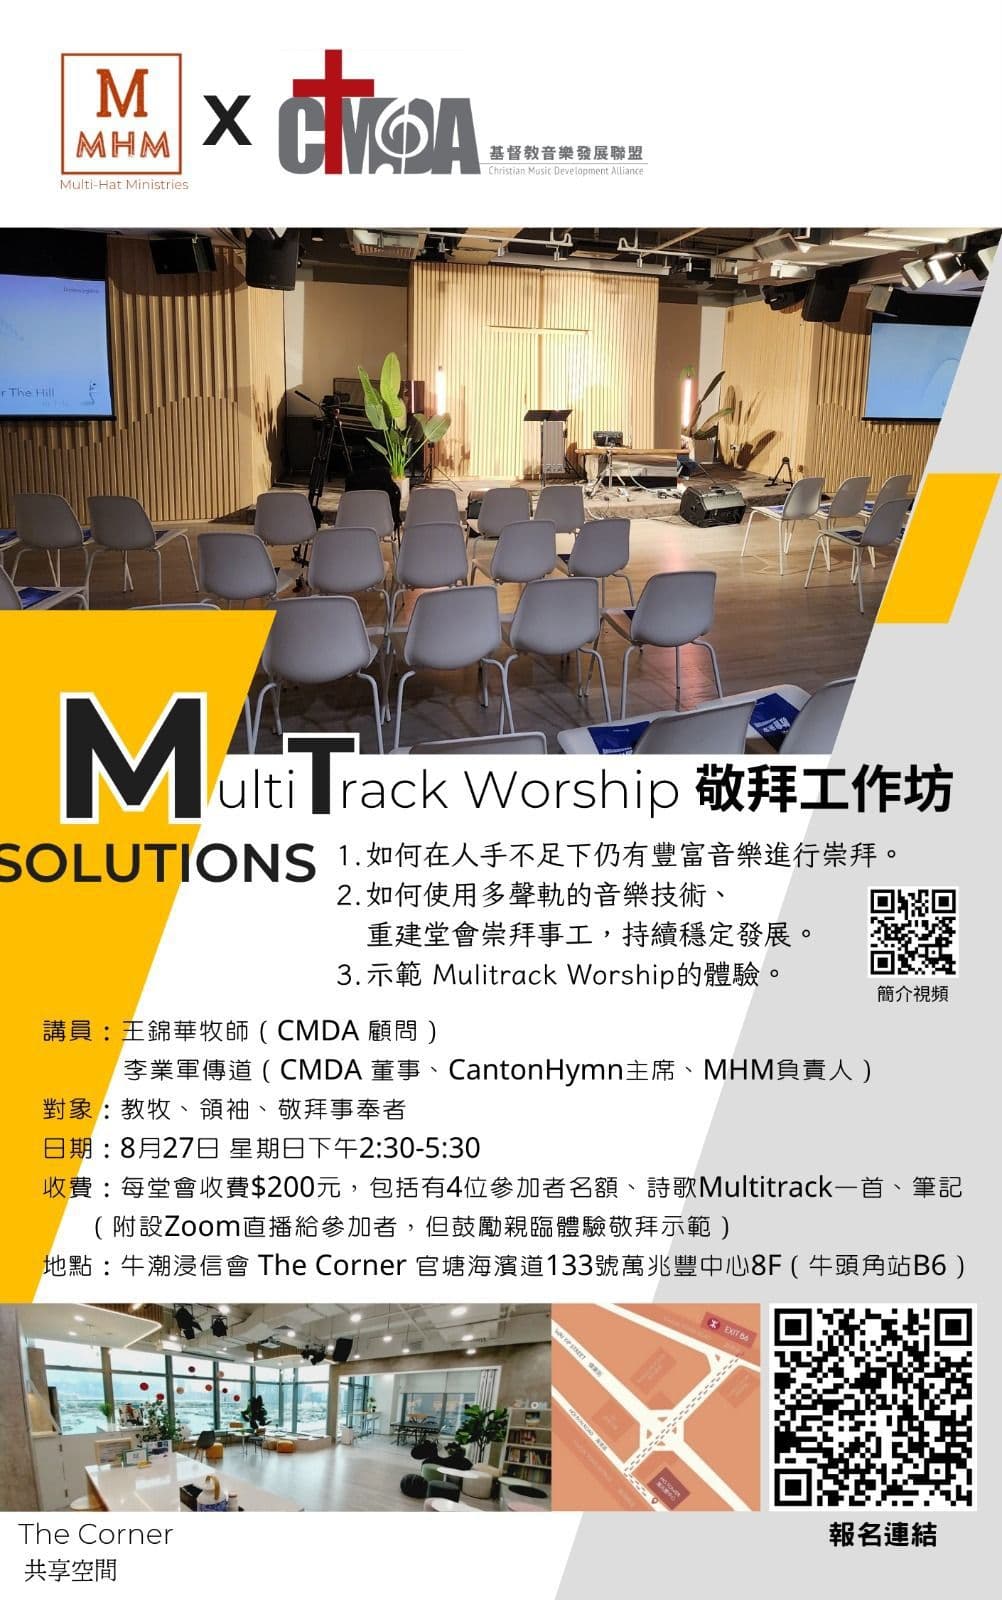 Course - Multitrack Worship 敬拜工作坊